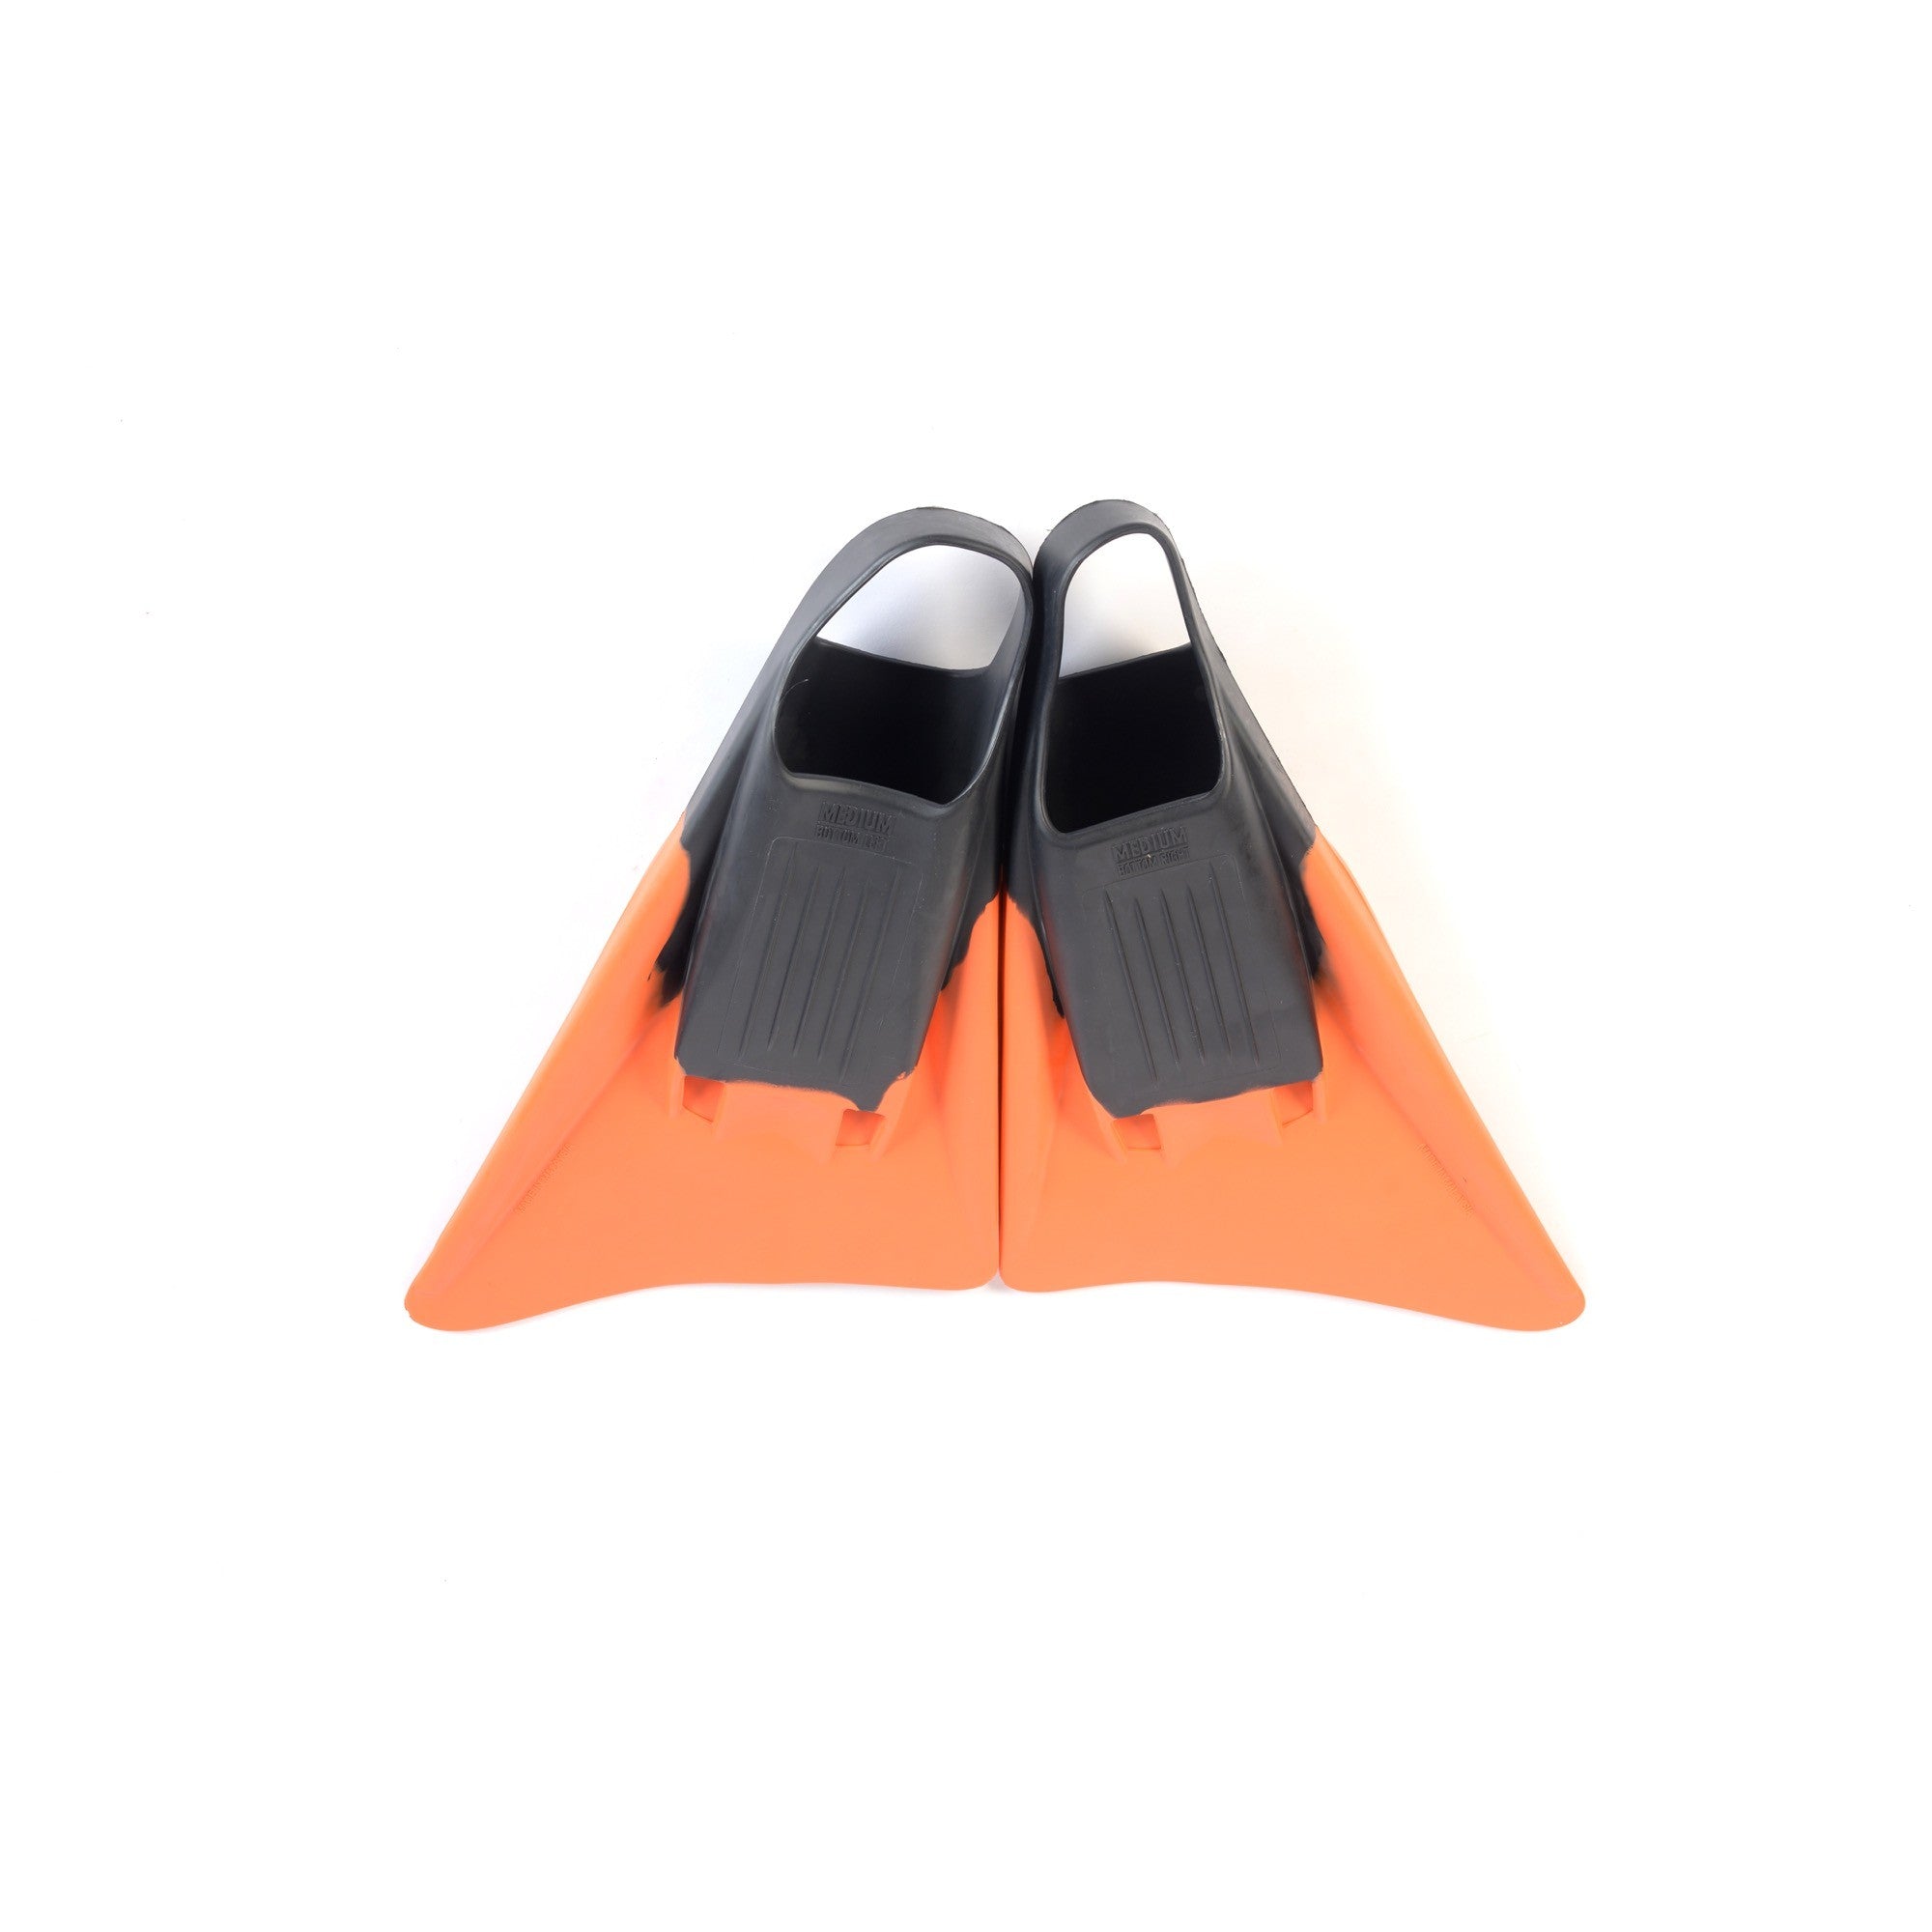 RIP SF300 Fins - Bodysurf and Bodyboard Fins - Black / Orange